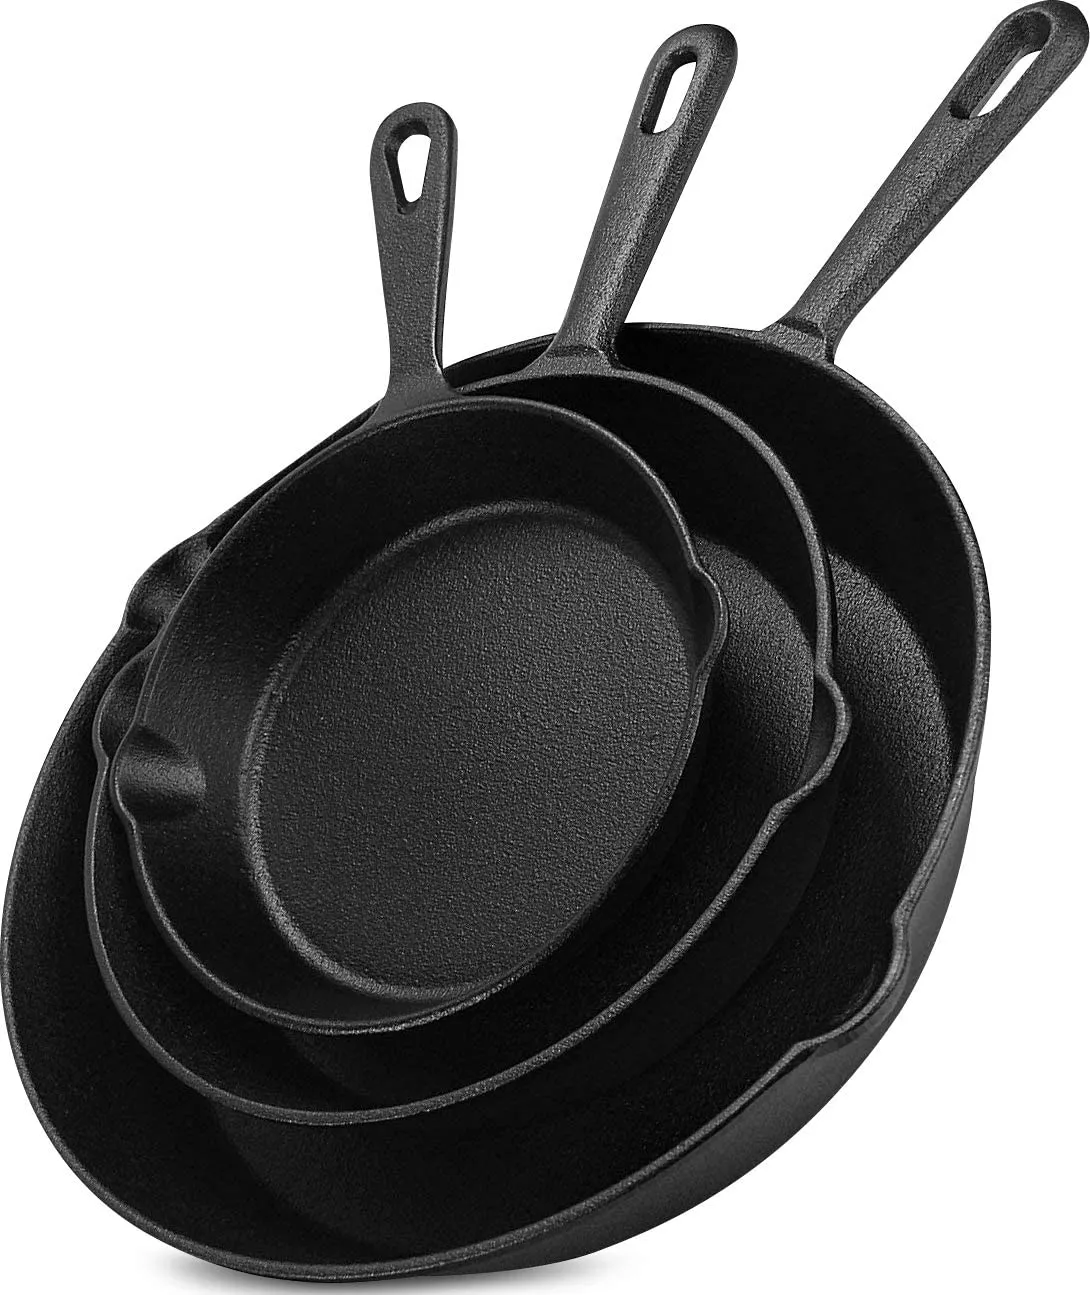 Pre-Seasoned Skillet Frying Pans for Indoor and Outdoor